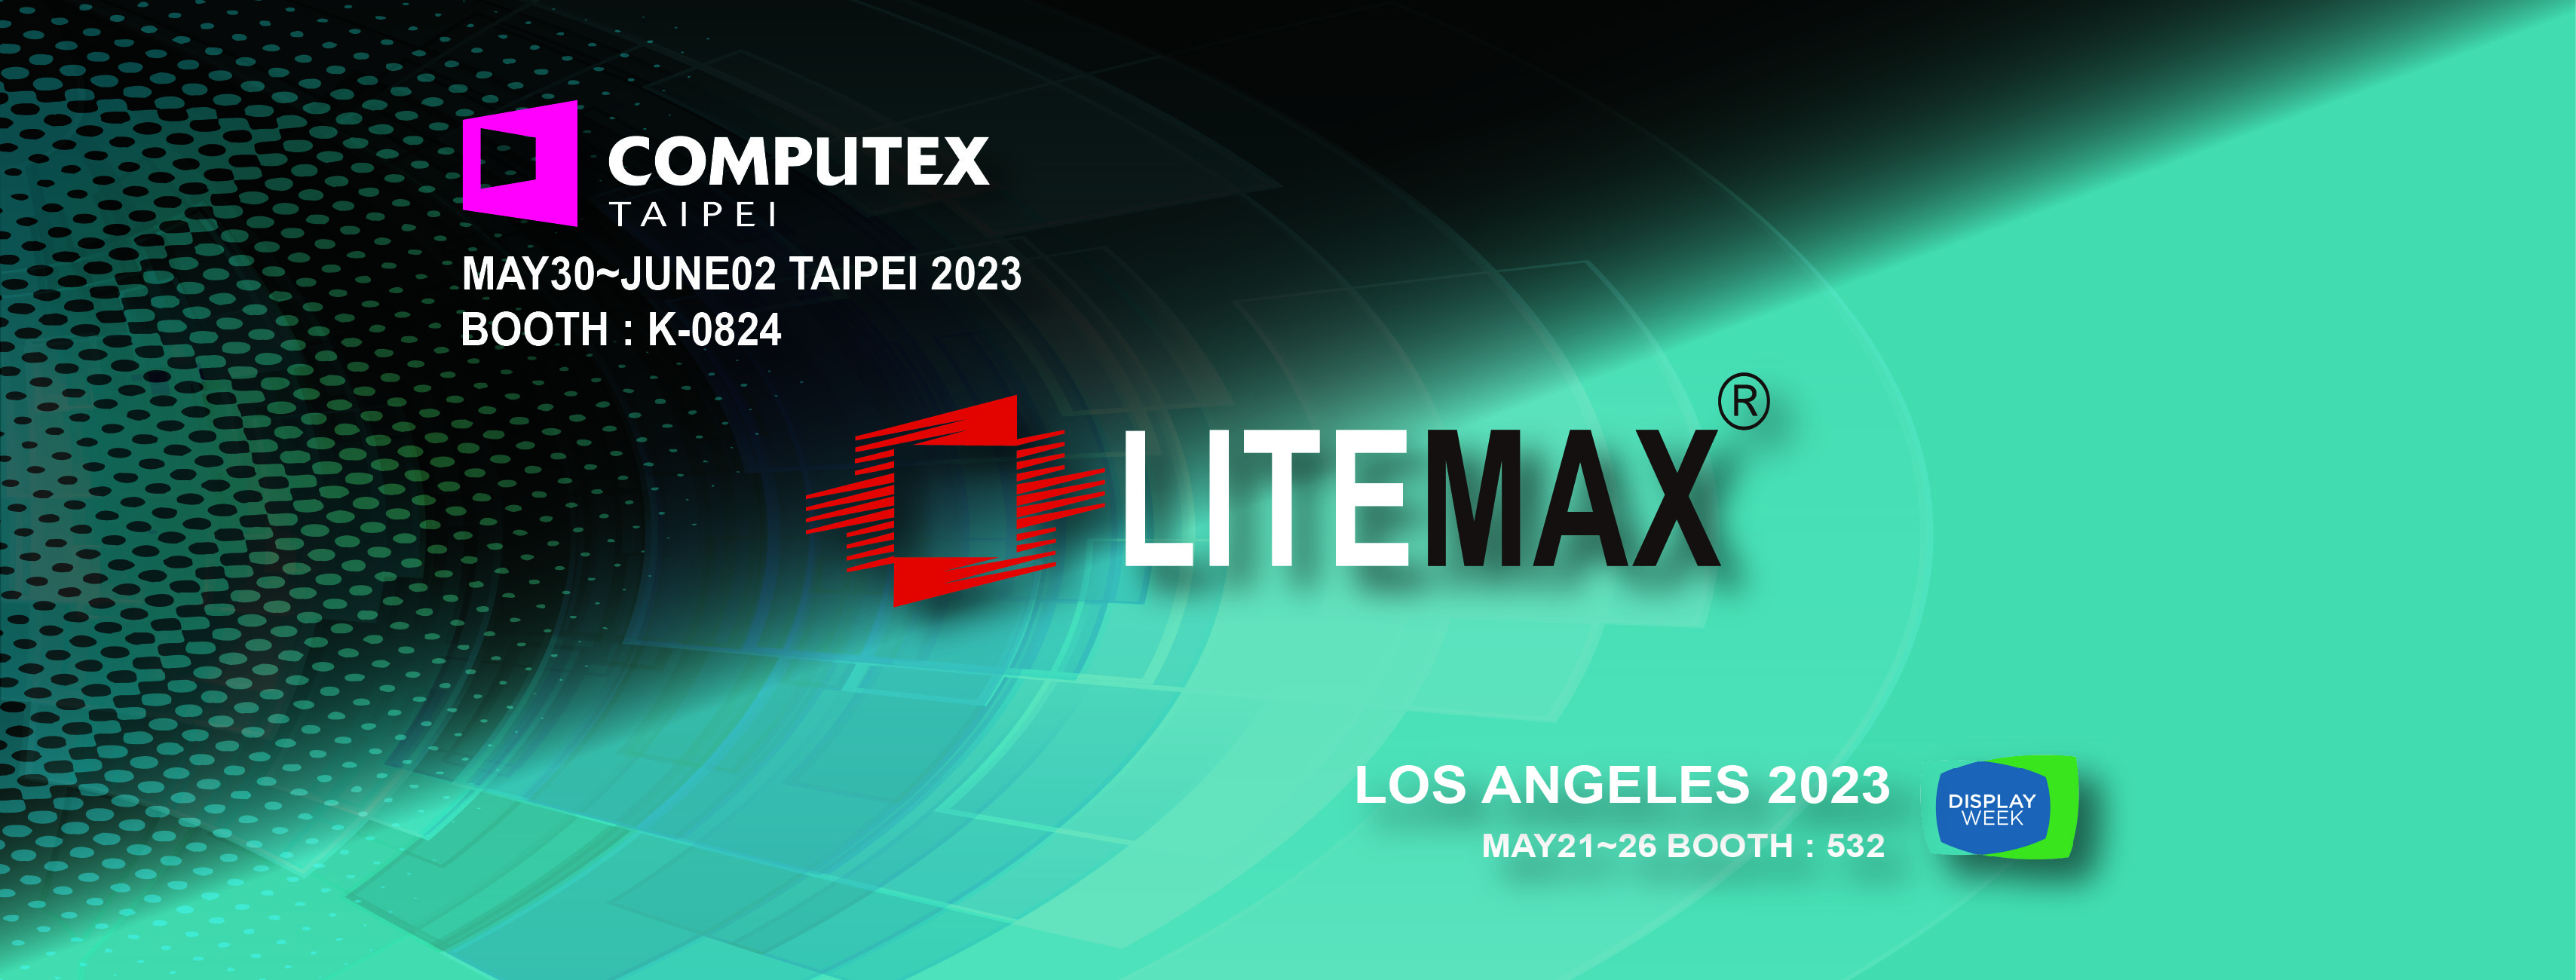 LITEMAX looks forward to meeting you at COMPUTEX and Display Week.